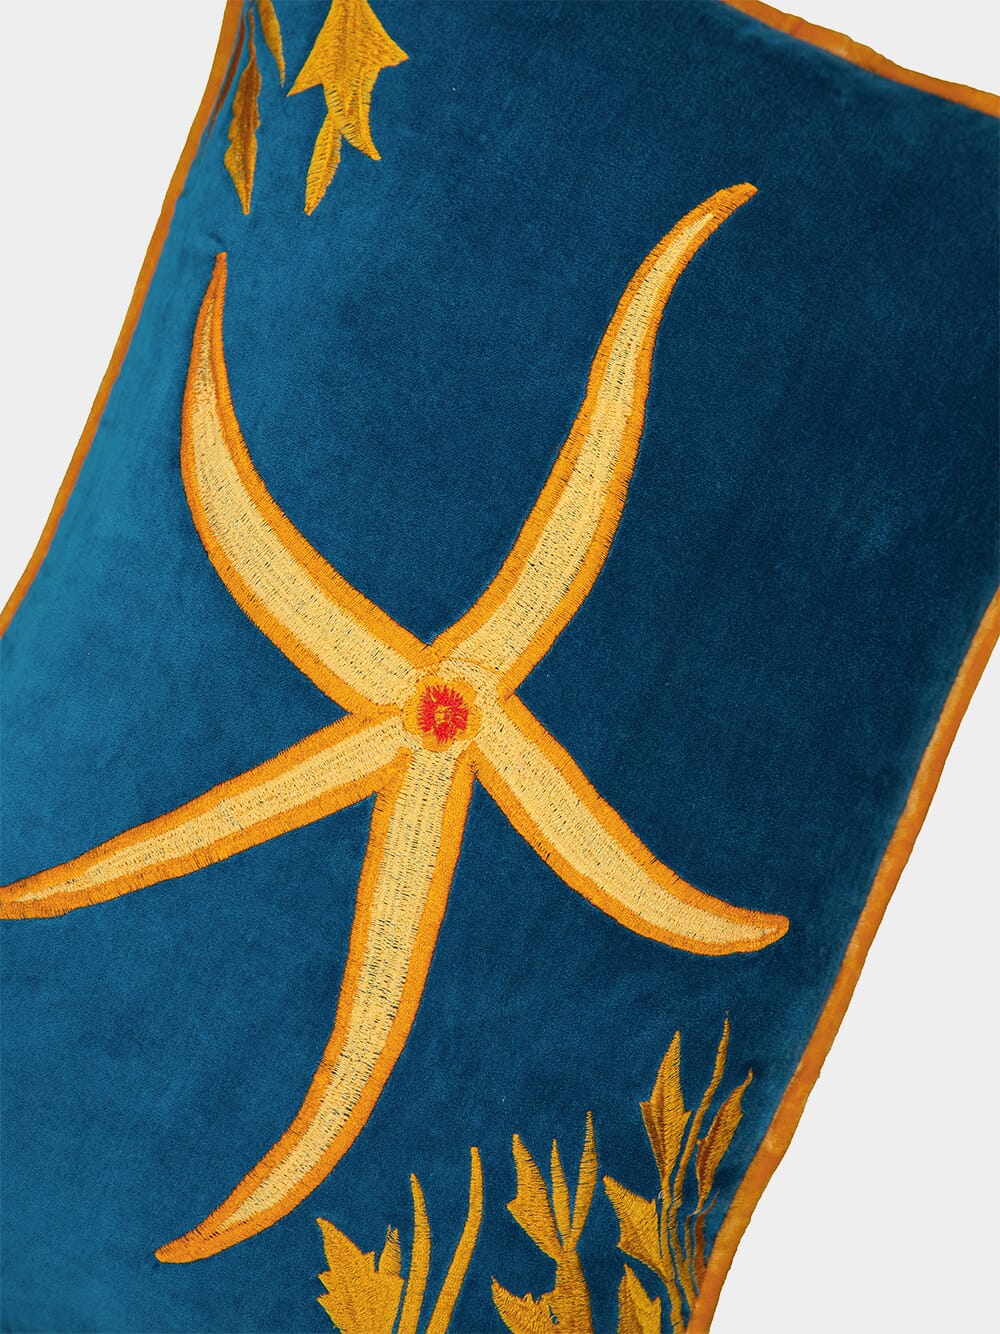 Embroidered Starfish Cushion